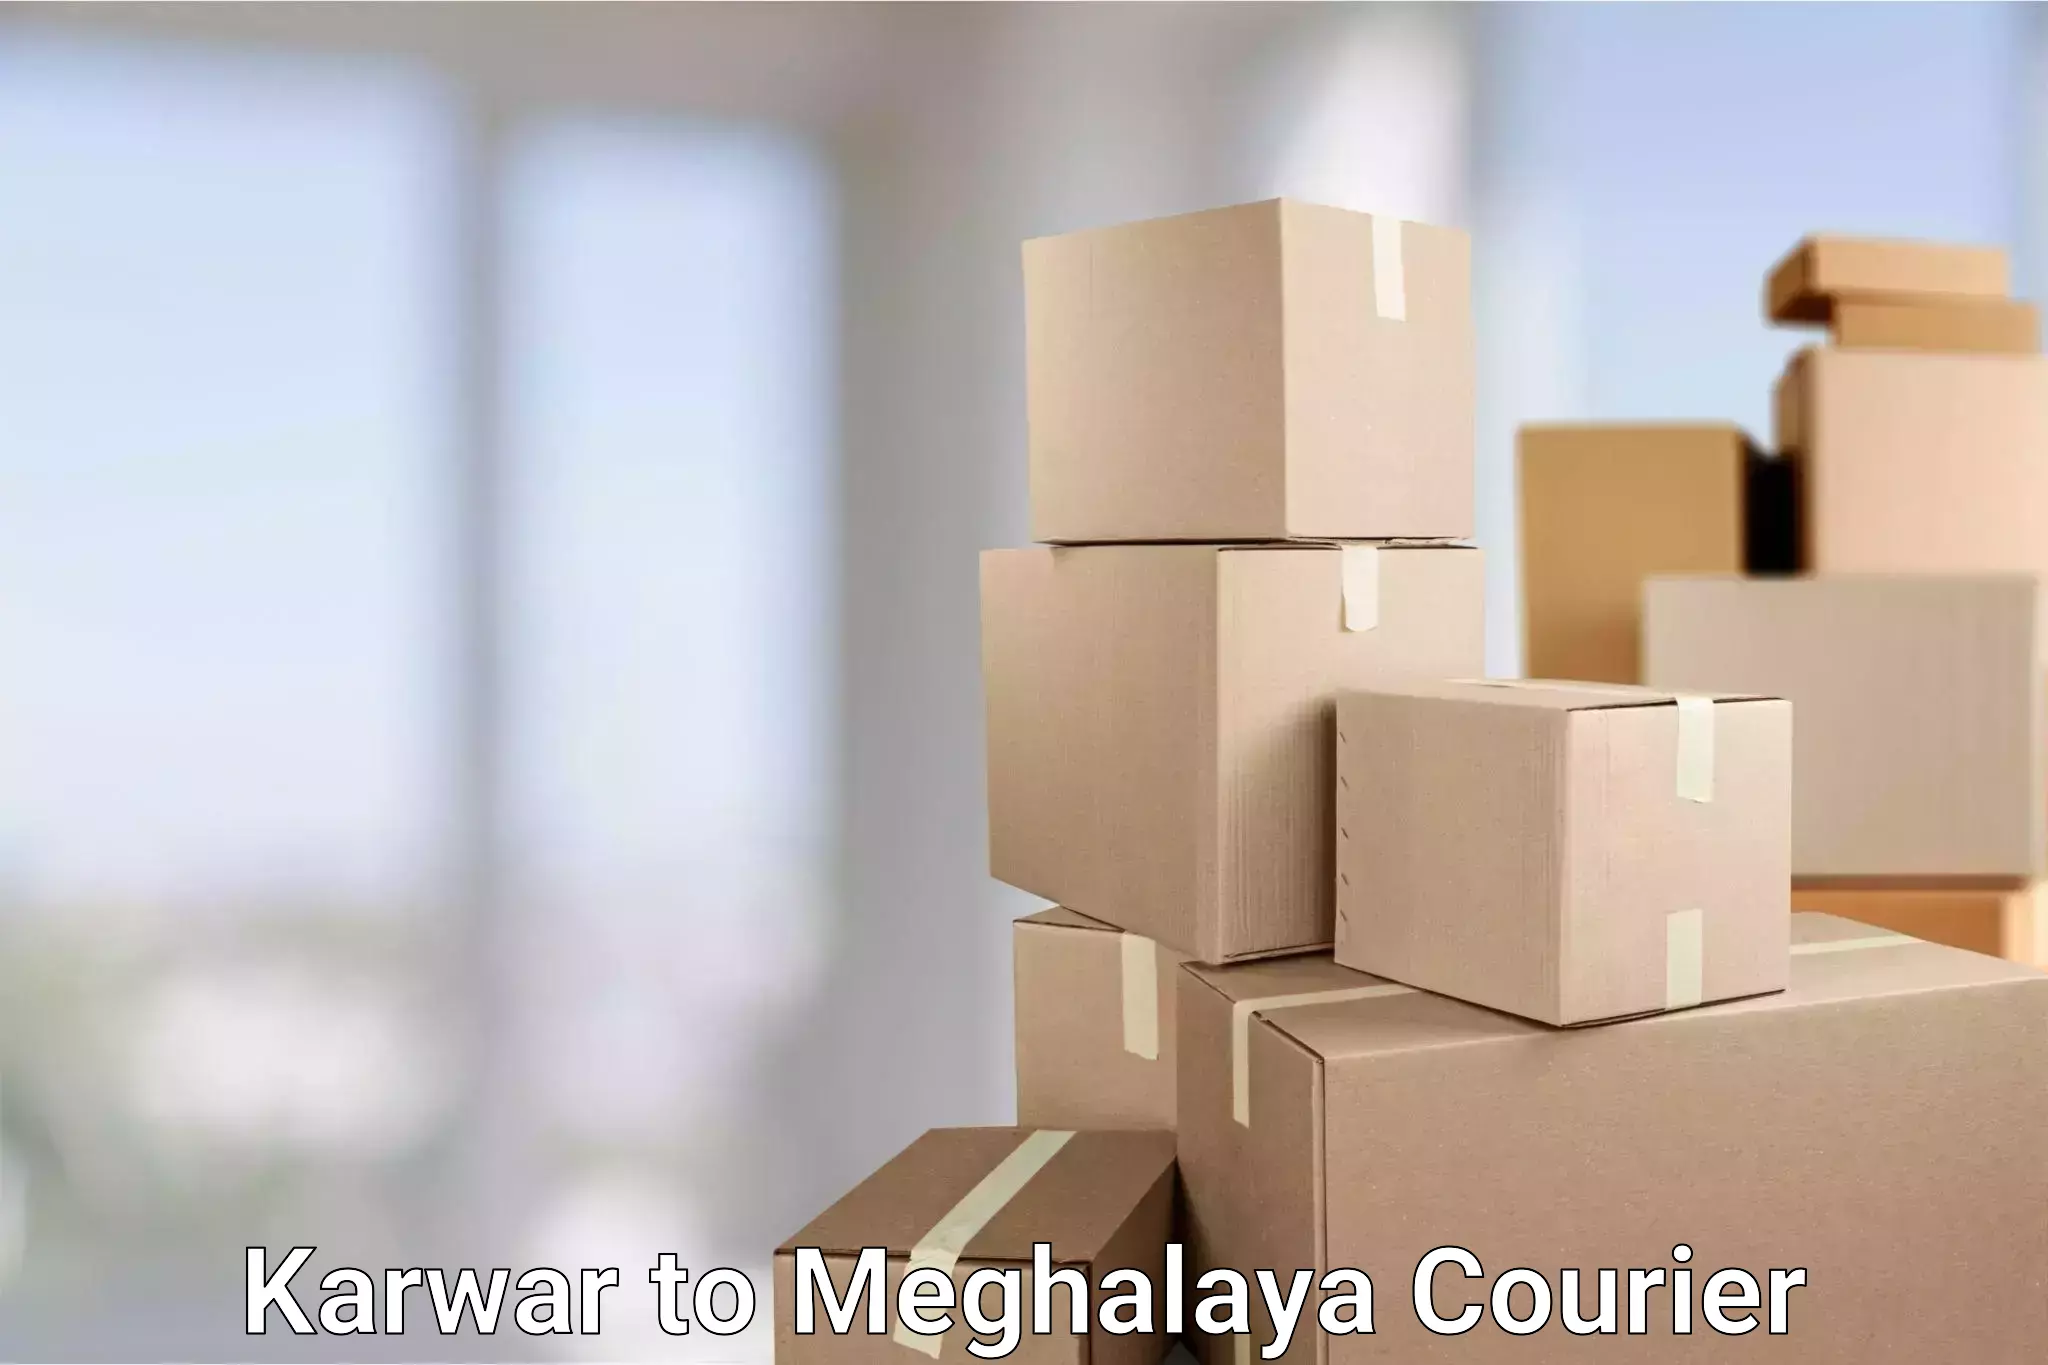 High-capacity parcel service Karwar to Meghalaya